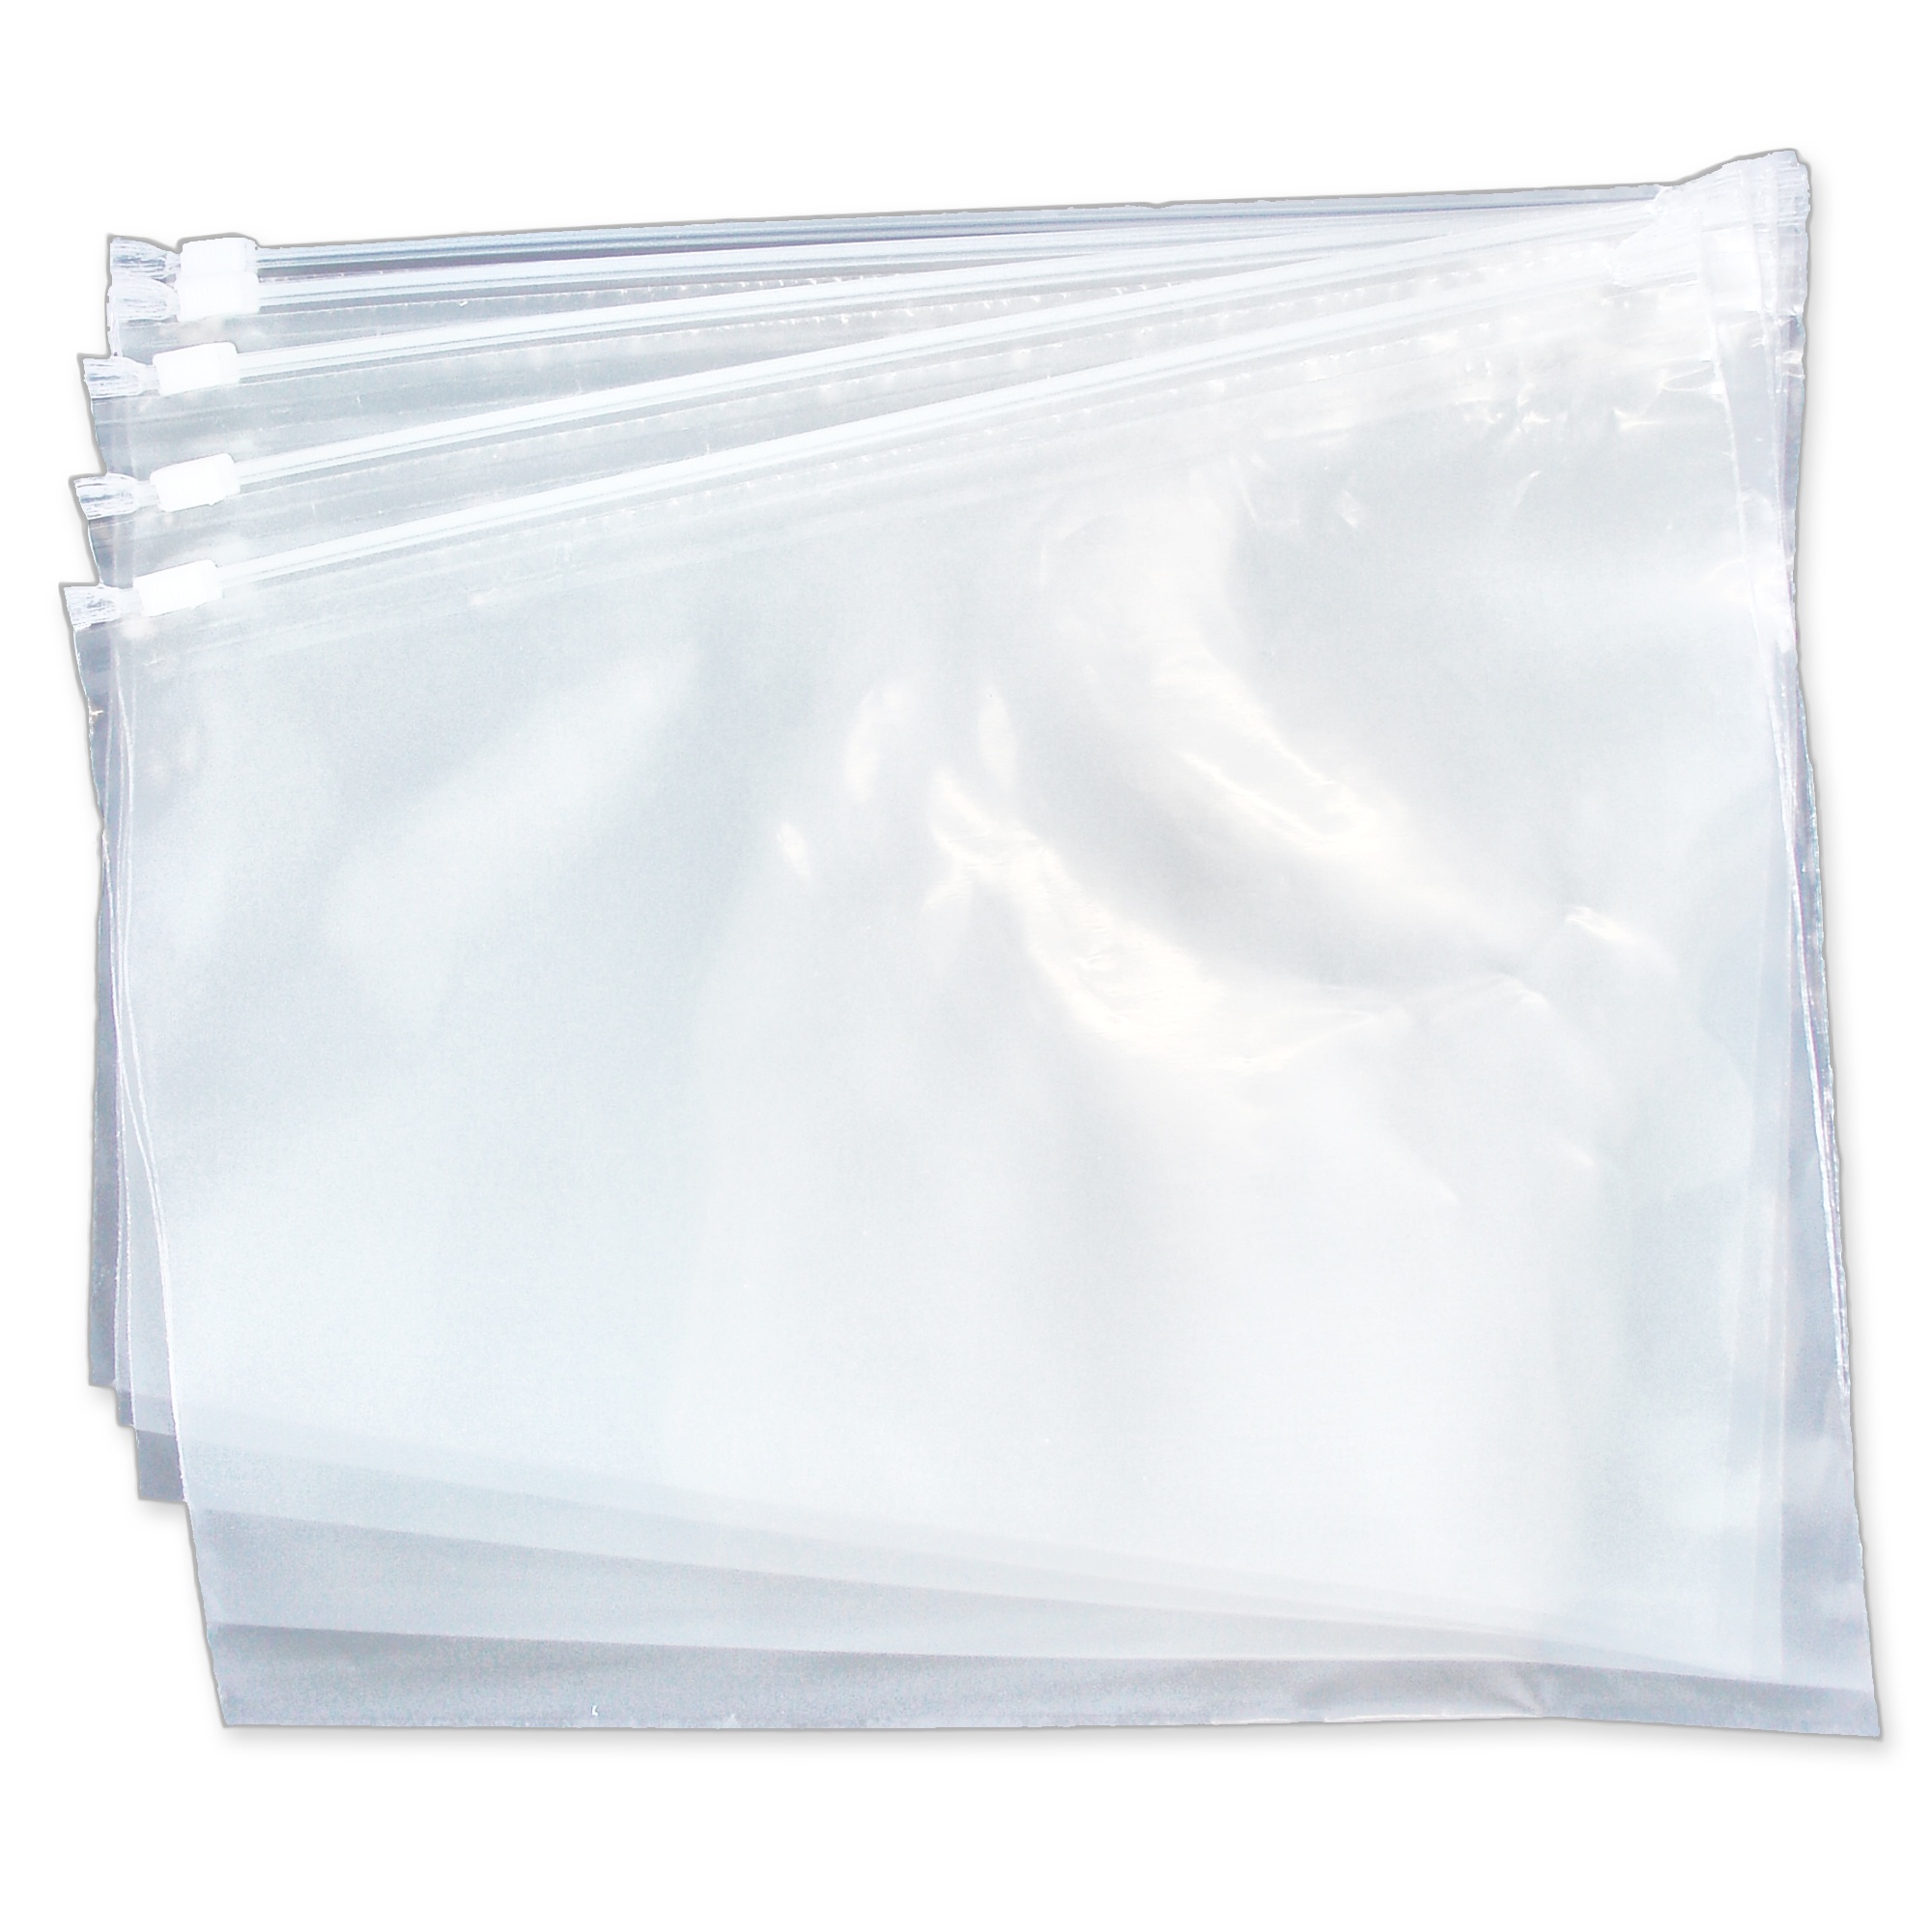 Dustproof bag with slider zipper Image